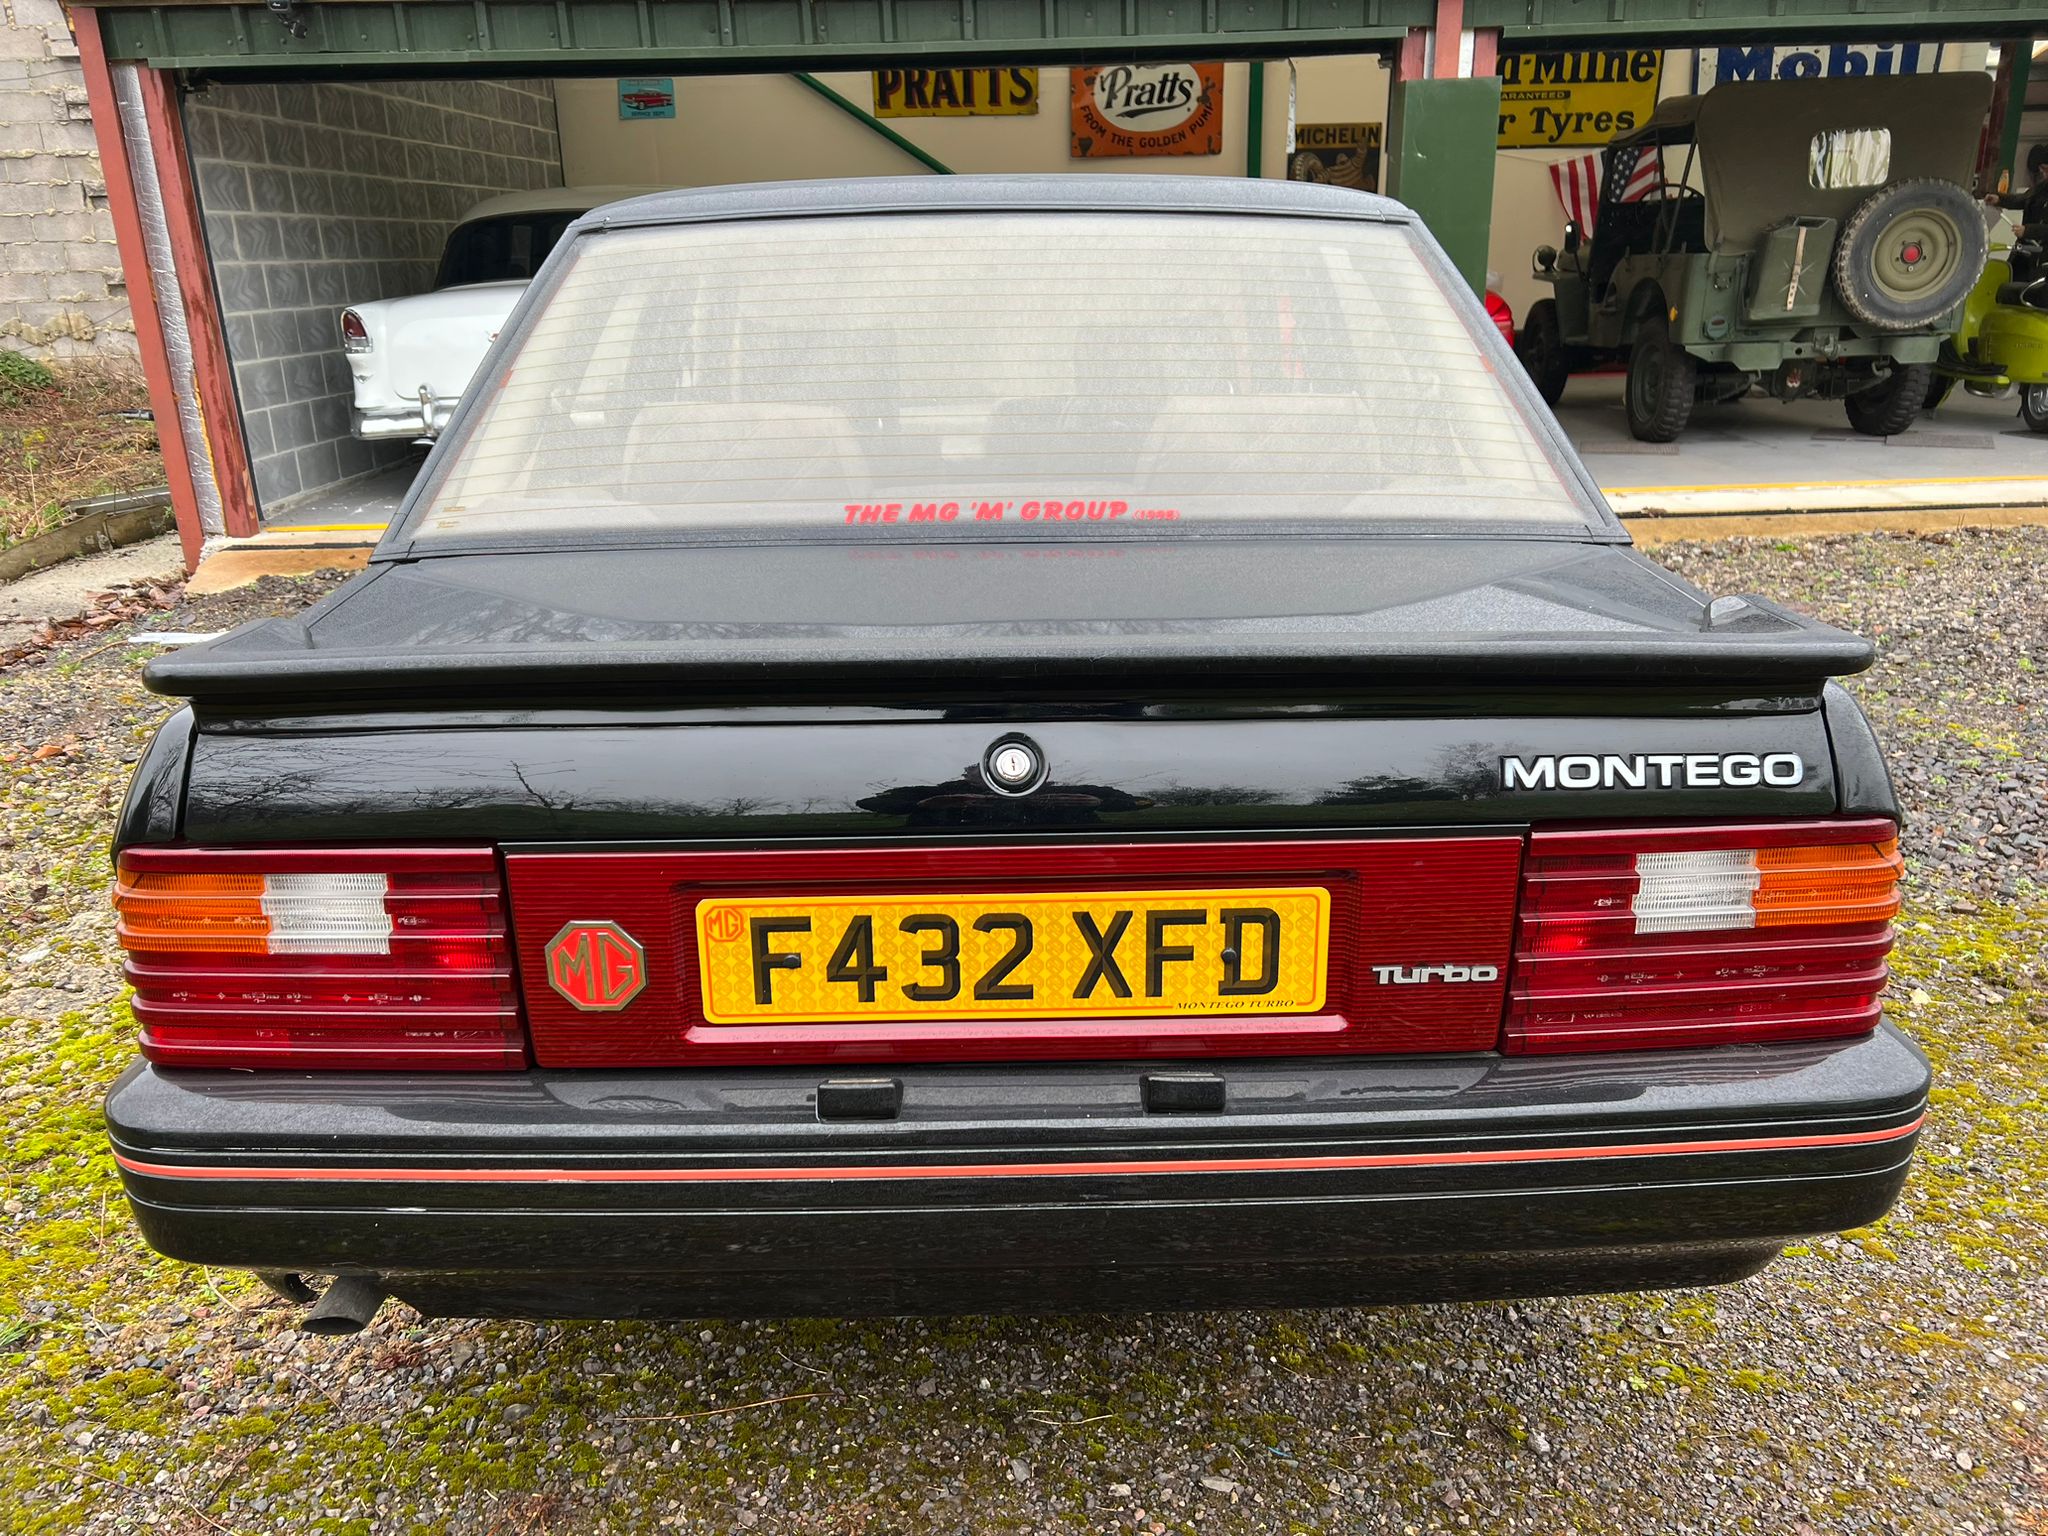 MG Montego Turbo 1988 - Image 4 of 14